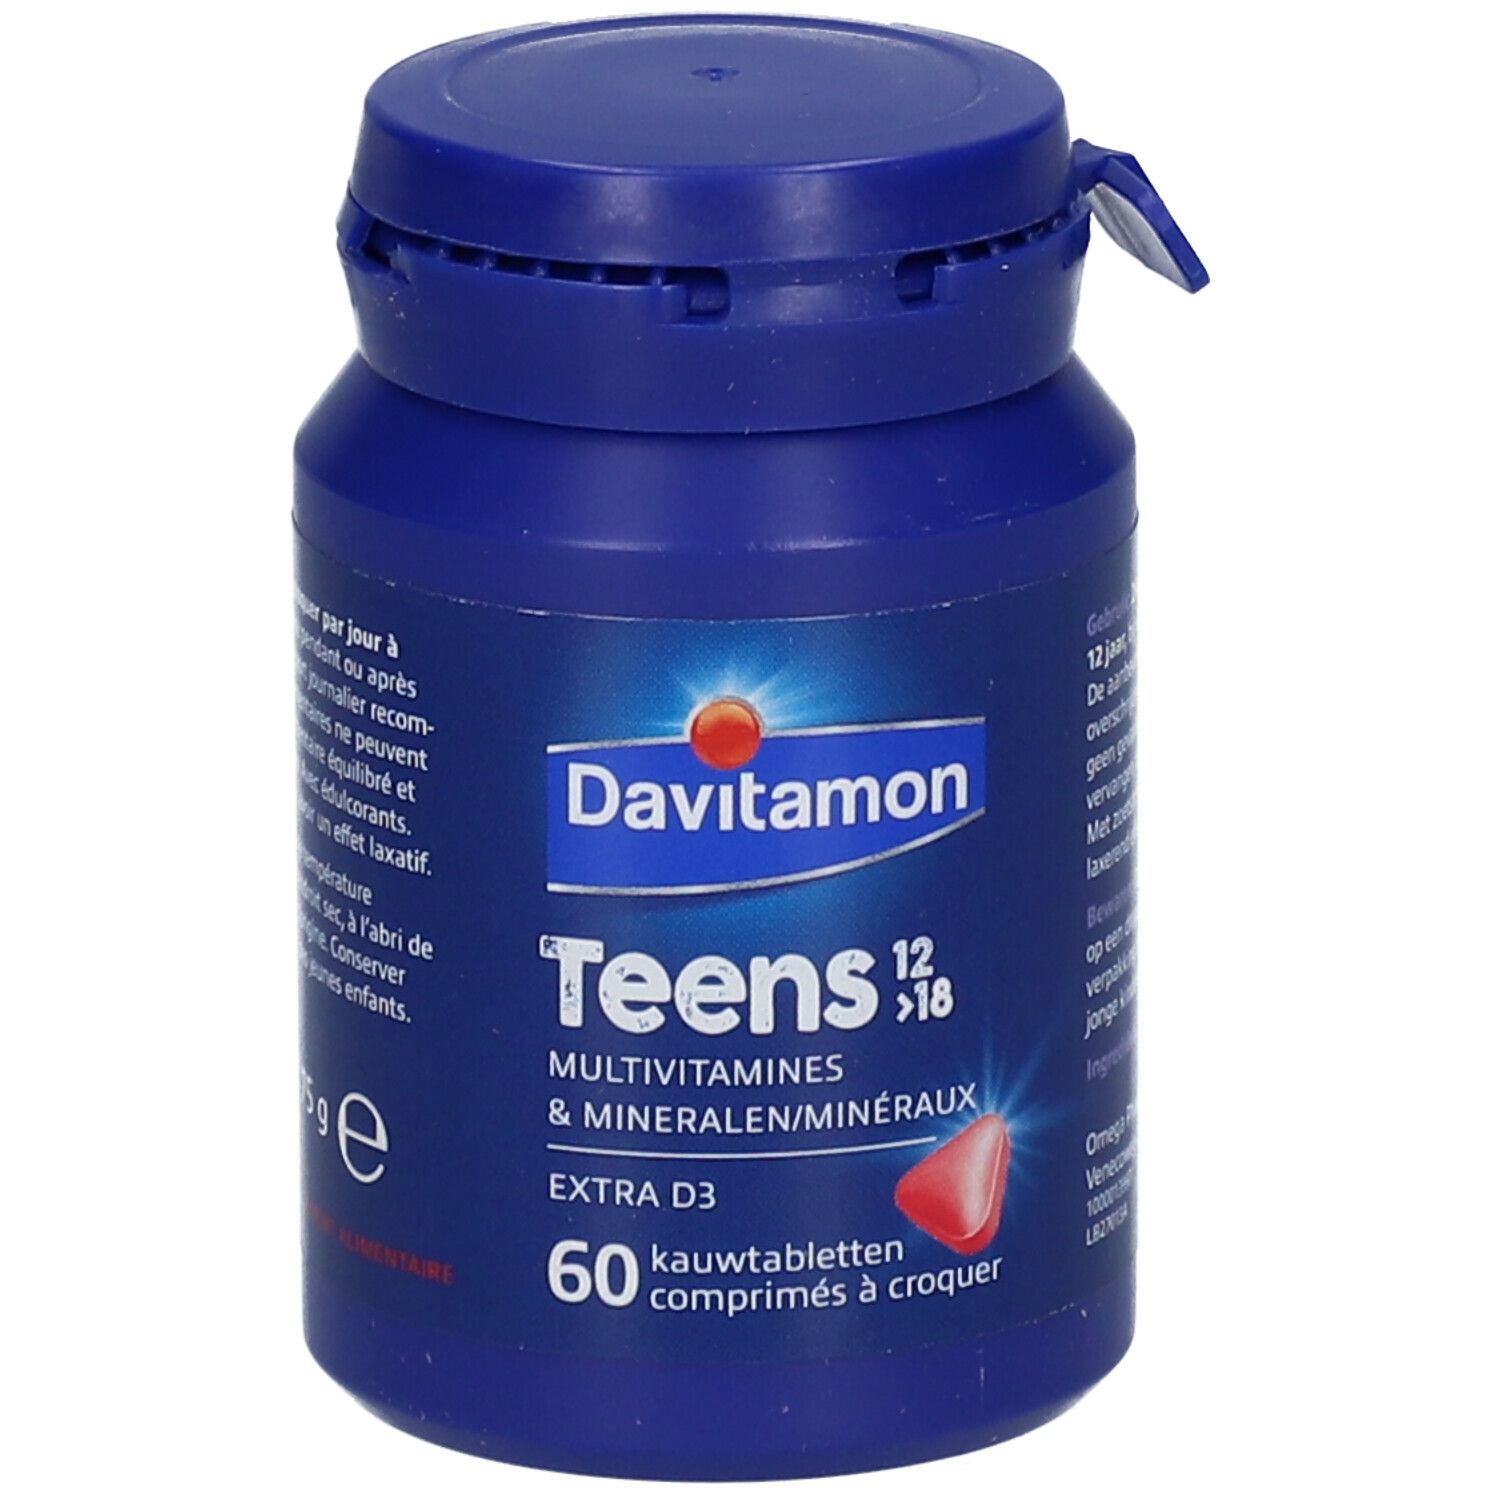 Davitamon Teens Multivitamines Fraise